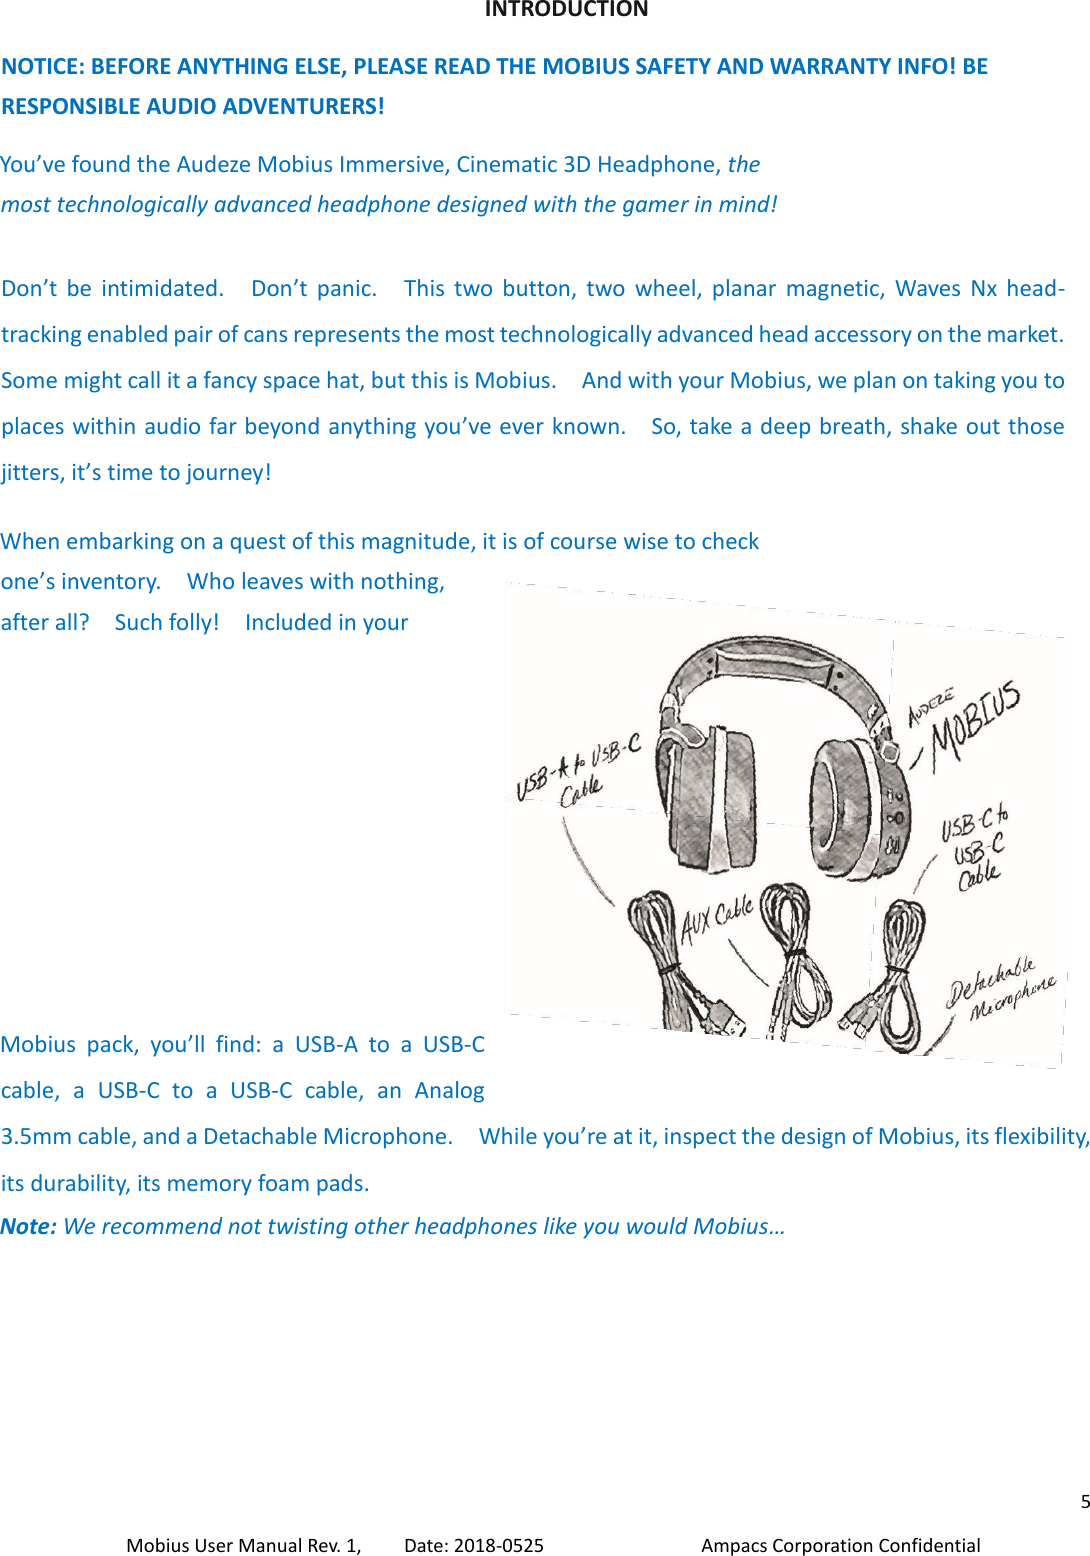 Page 5 of Audeze MOBIUS Immersive Cinematic 3D Audio Headphone User Manual 